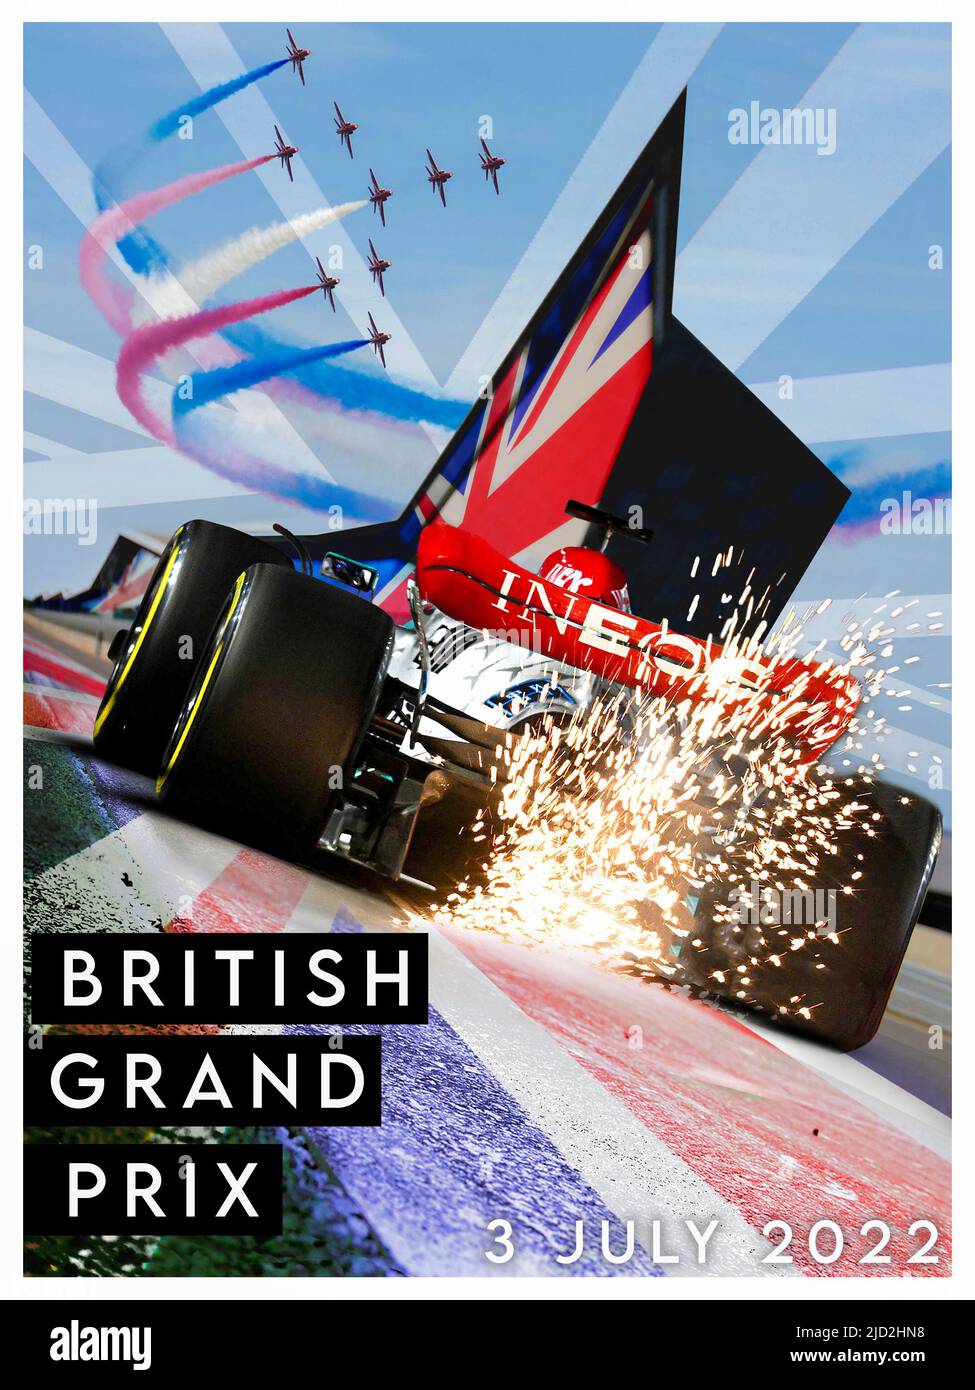 British F1 Grand Prix Race Poster Stock Photo